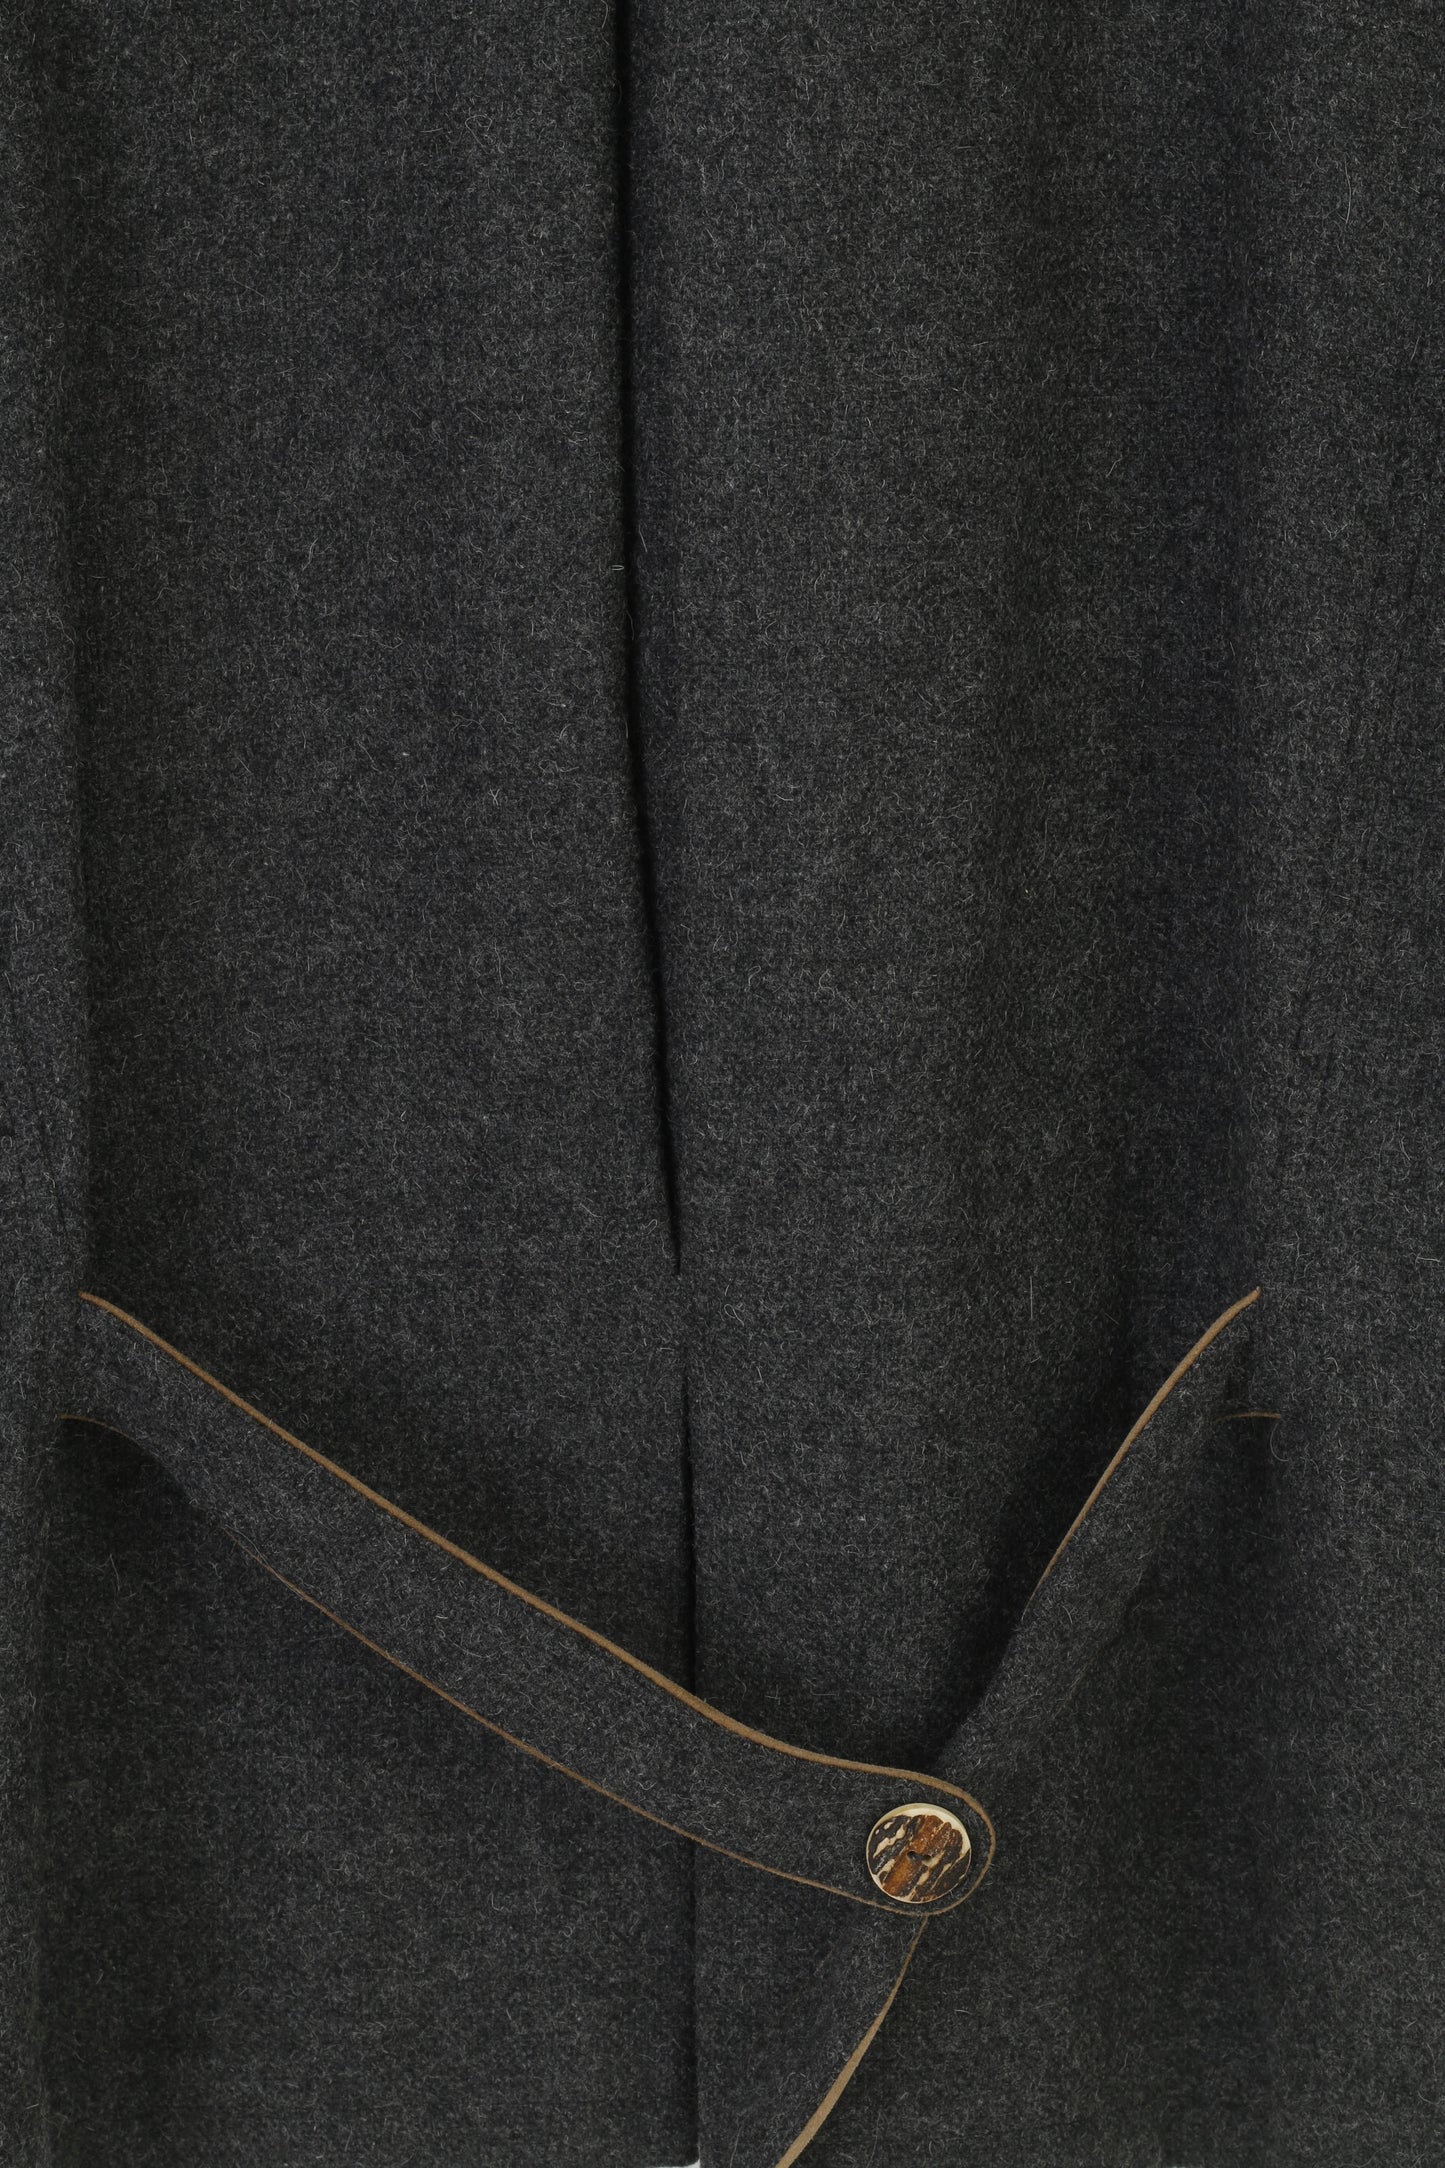 Lodenfrey Men 56 Blazer Wool Grey Vintage Tyrol Tiroler Loden Collar  Bottoms Jacket Top